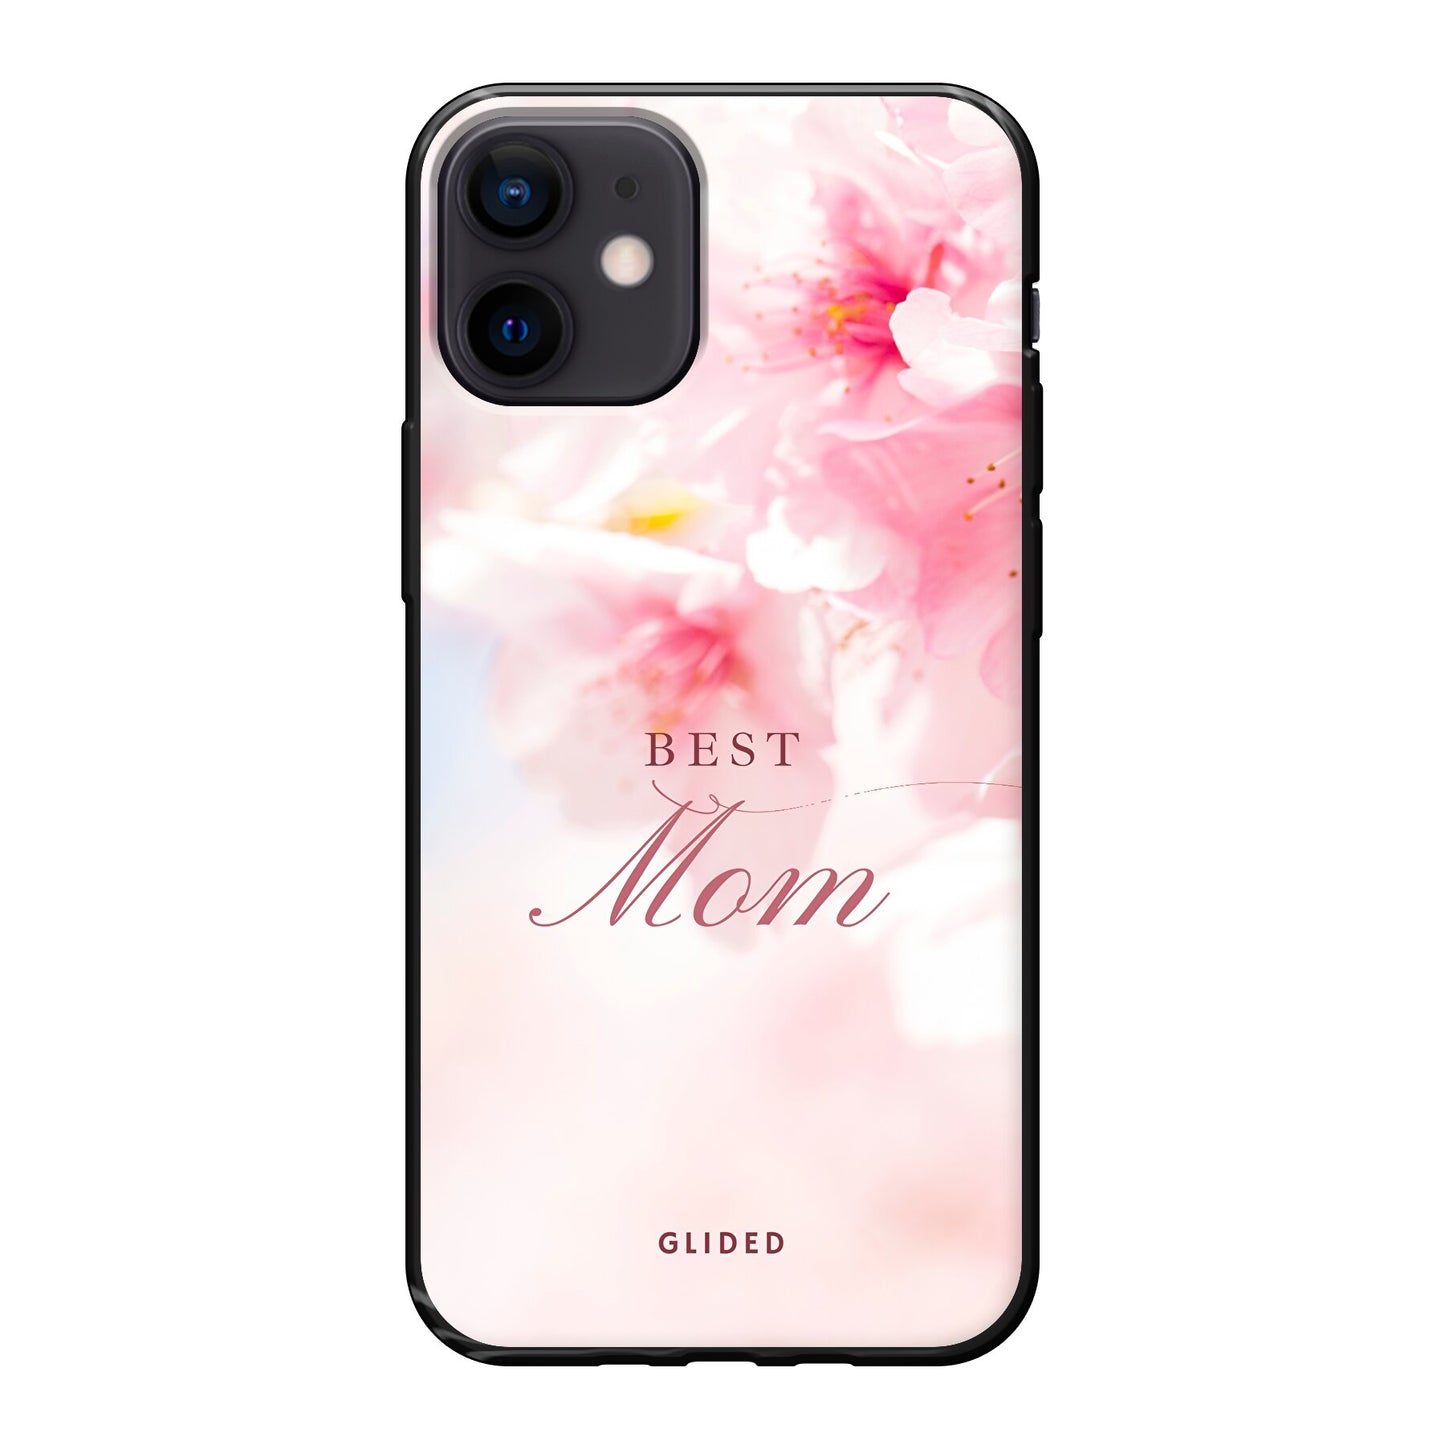 Flower Power - iPhone 12 mini - Soft case